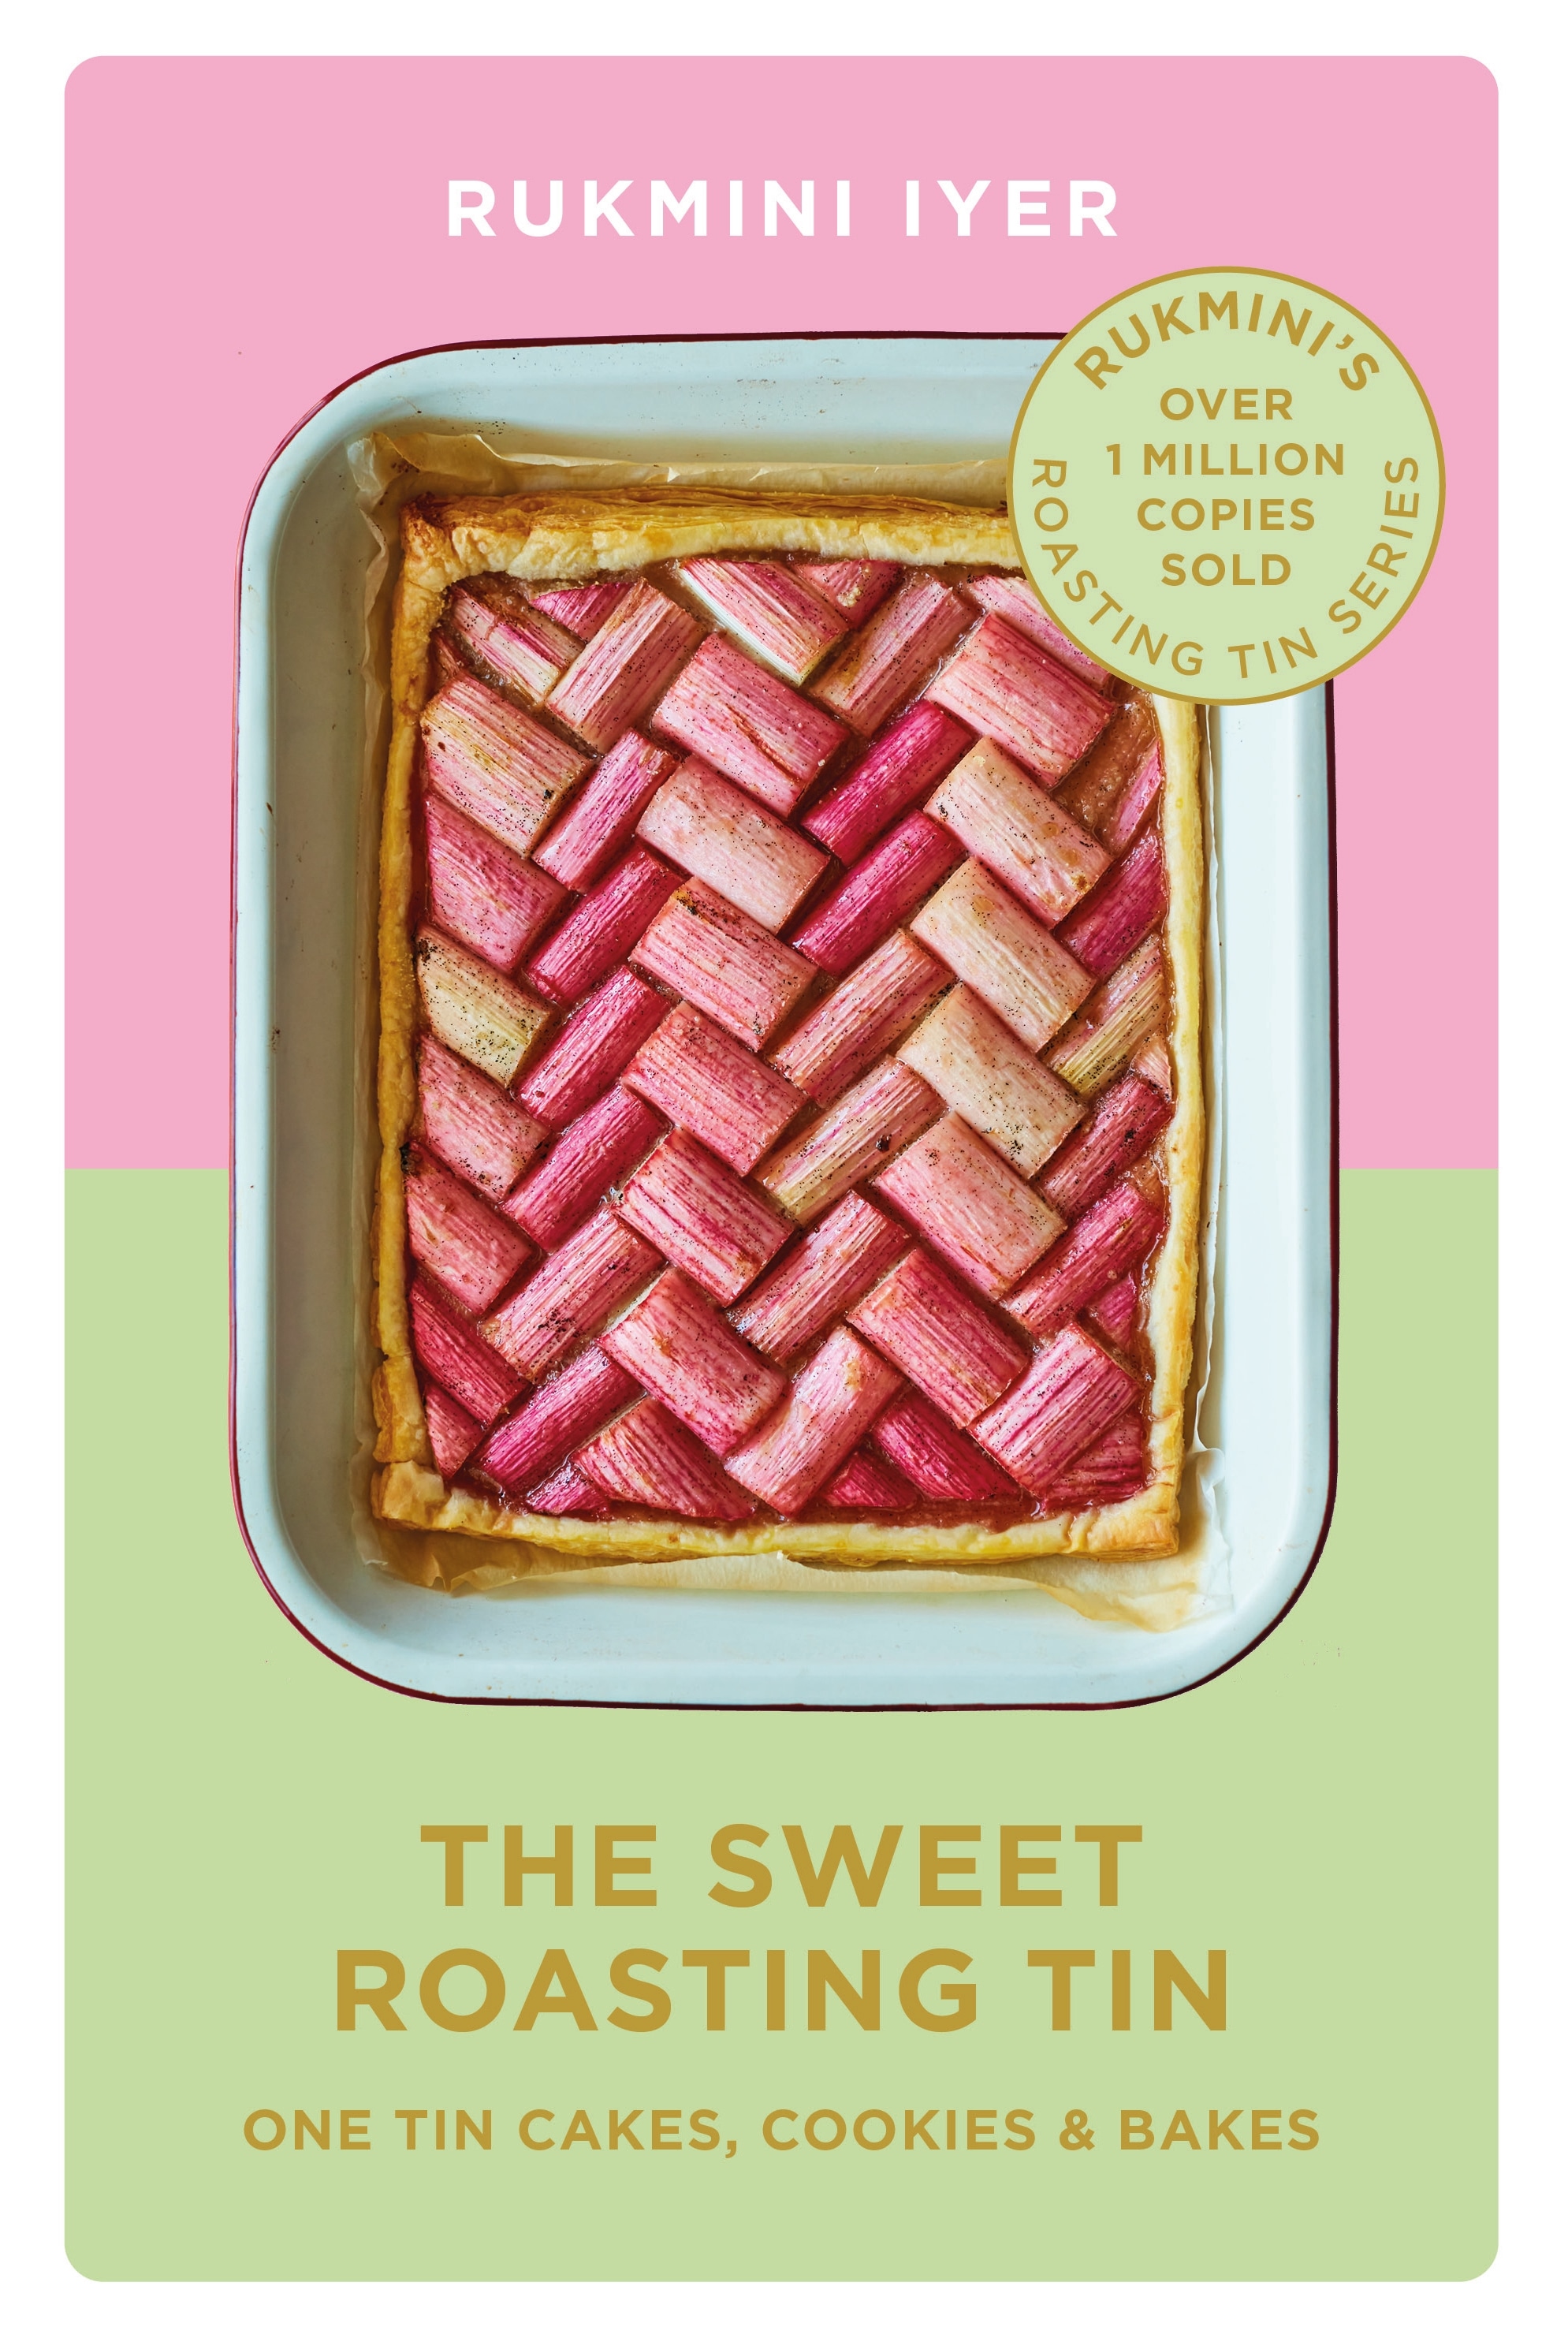 Book “The Sweet Roasting Tin” by Rukmini Iyer — September 2, 2021